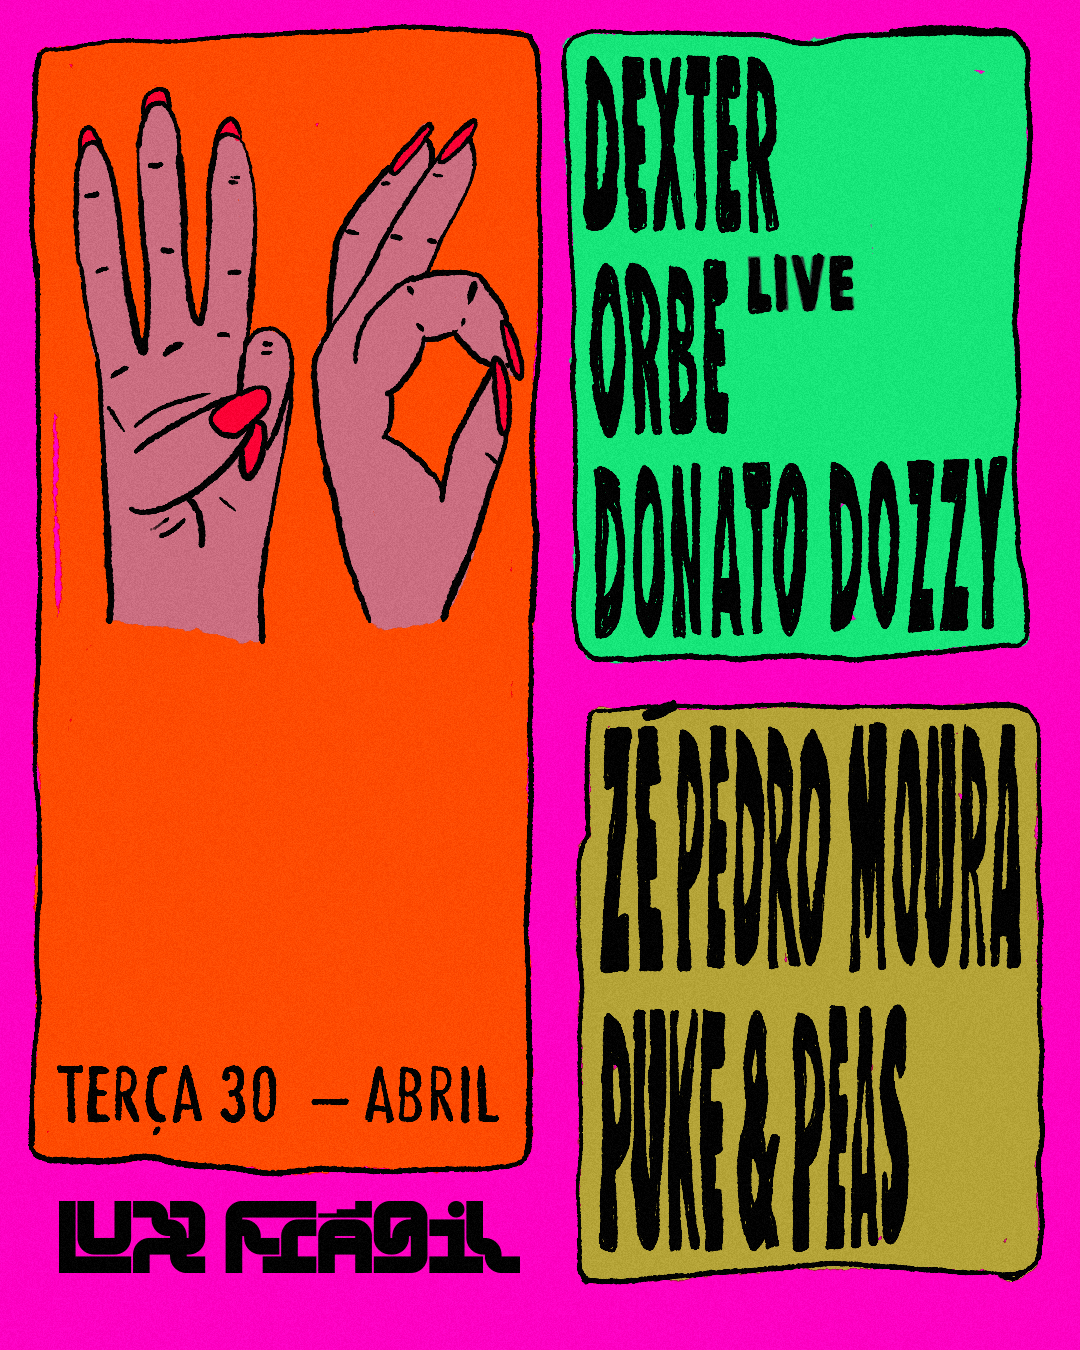 Donato Dozzy x ORBE live x Dexter - フライヤー表